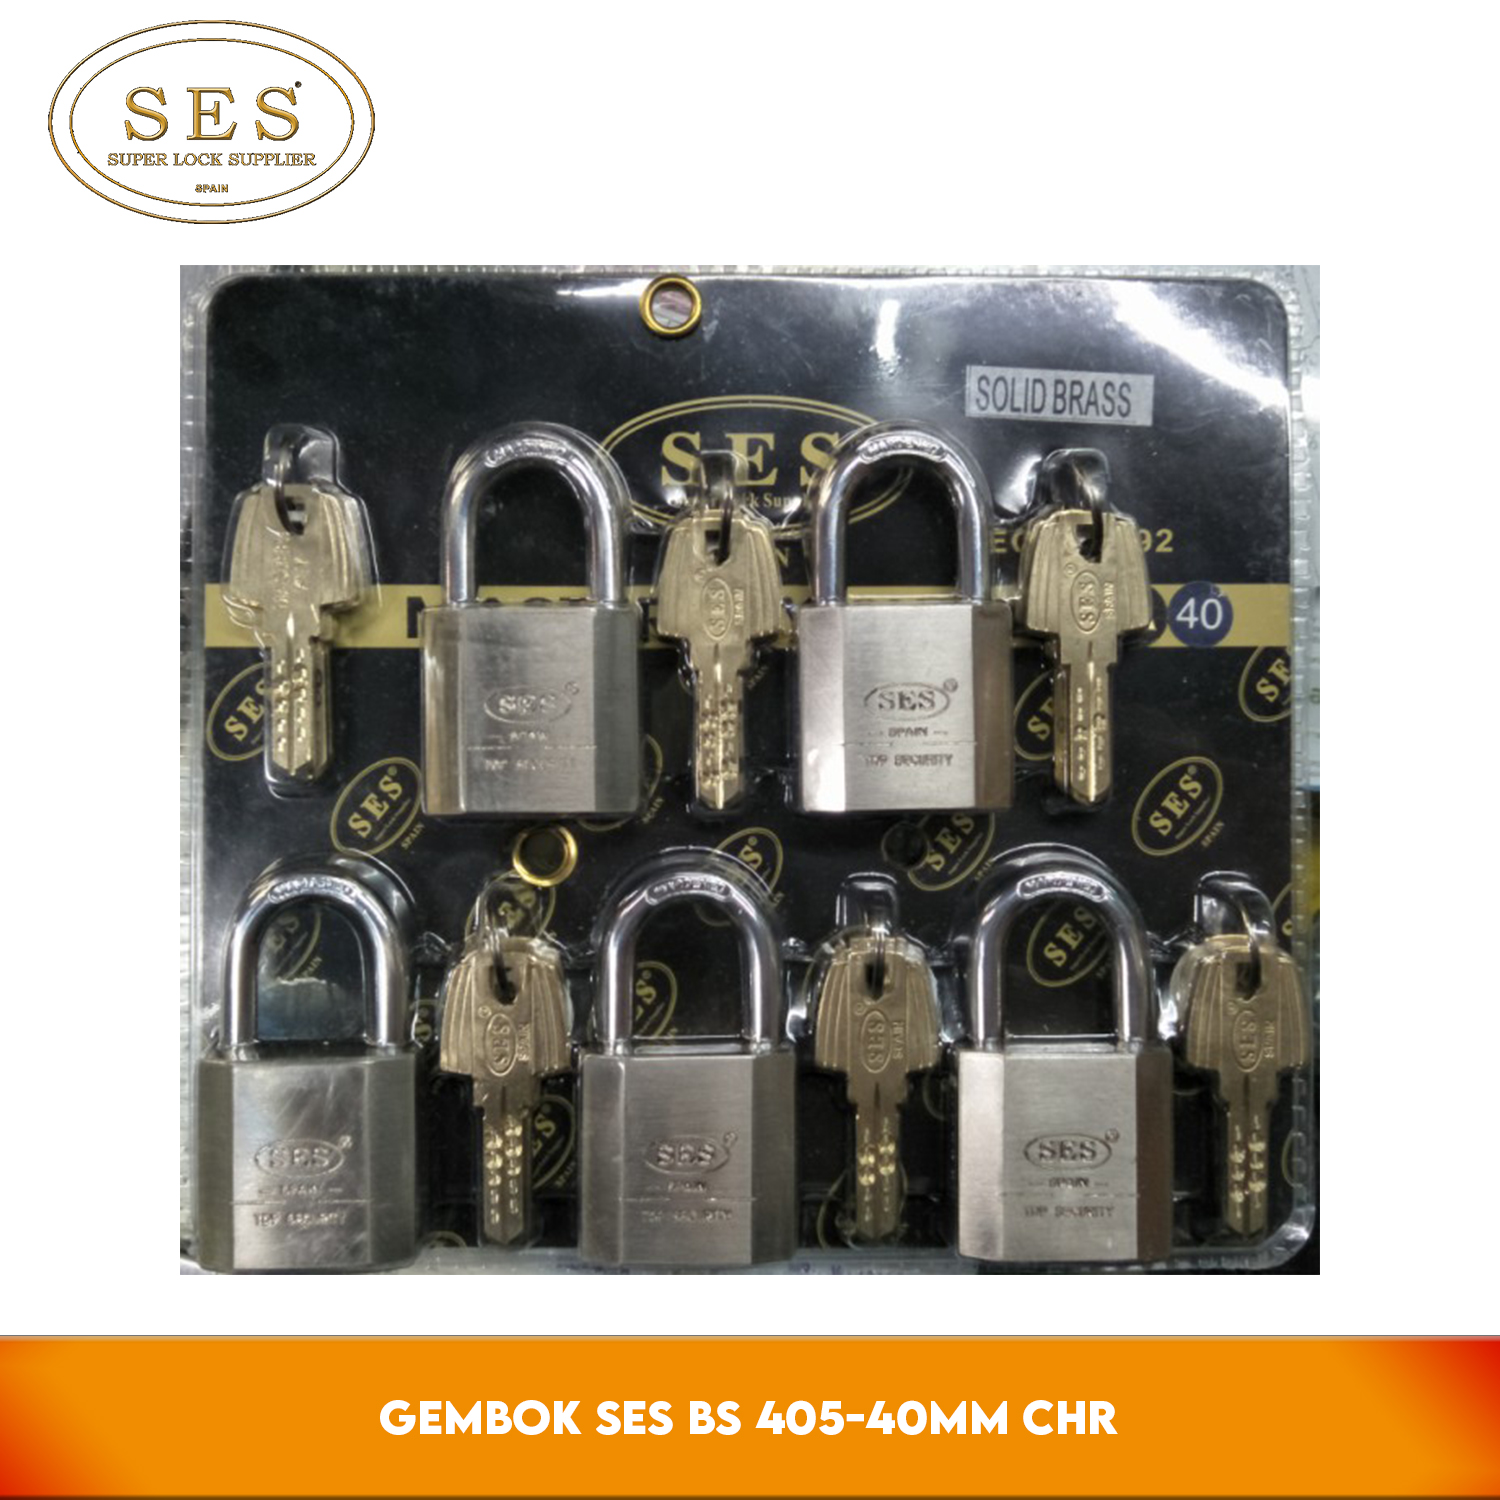 Gembok SES BS 405-40MM CHR 